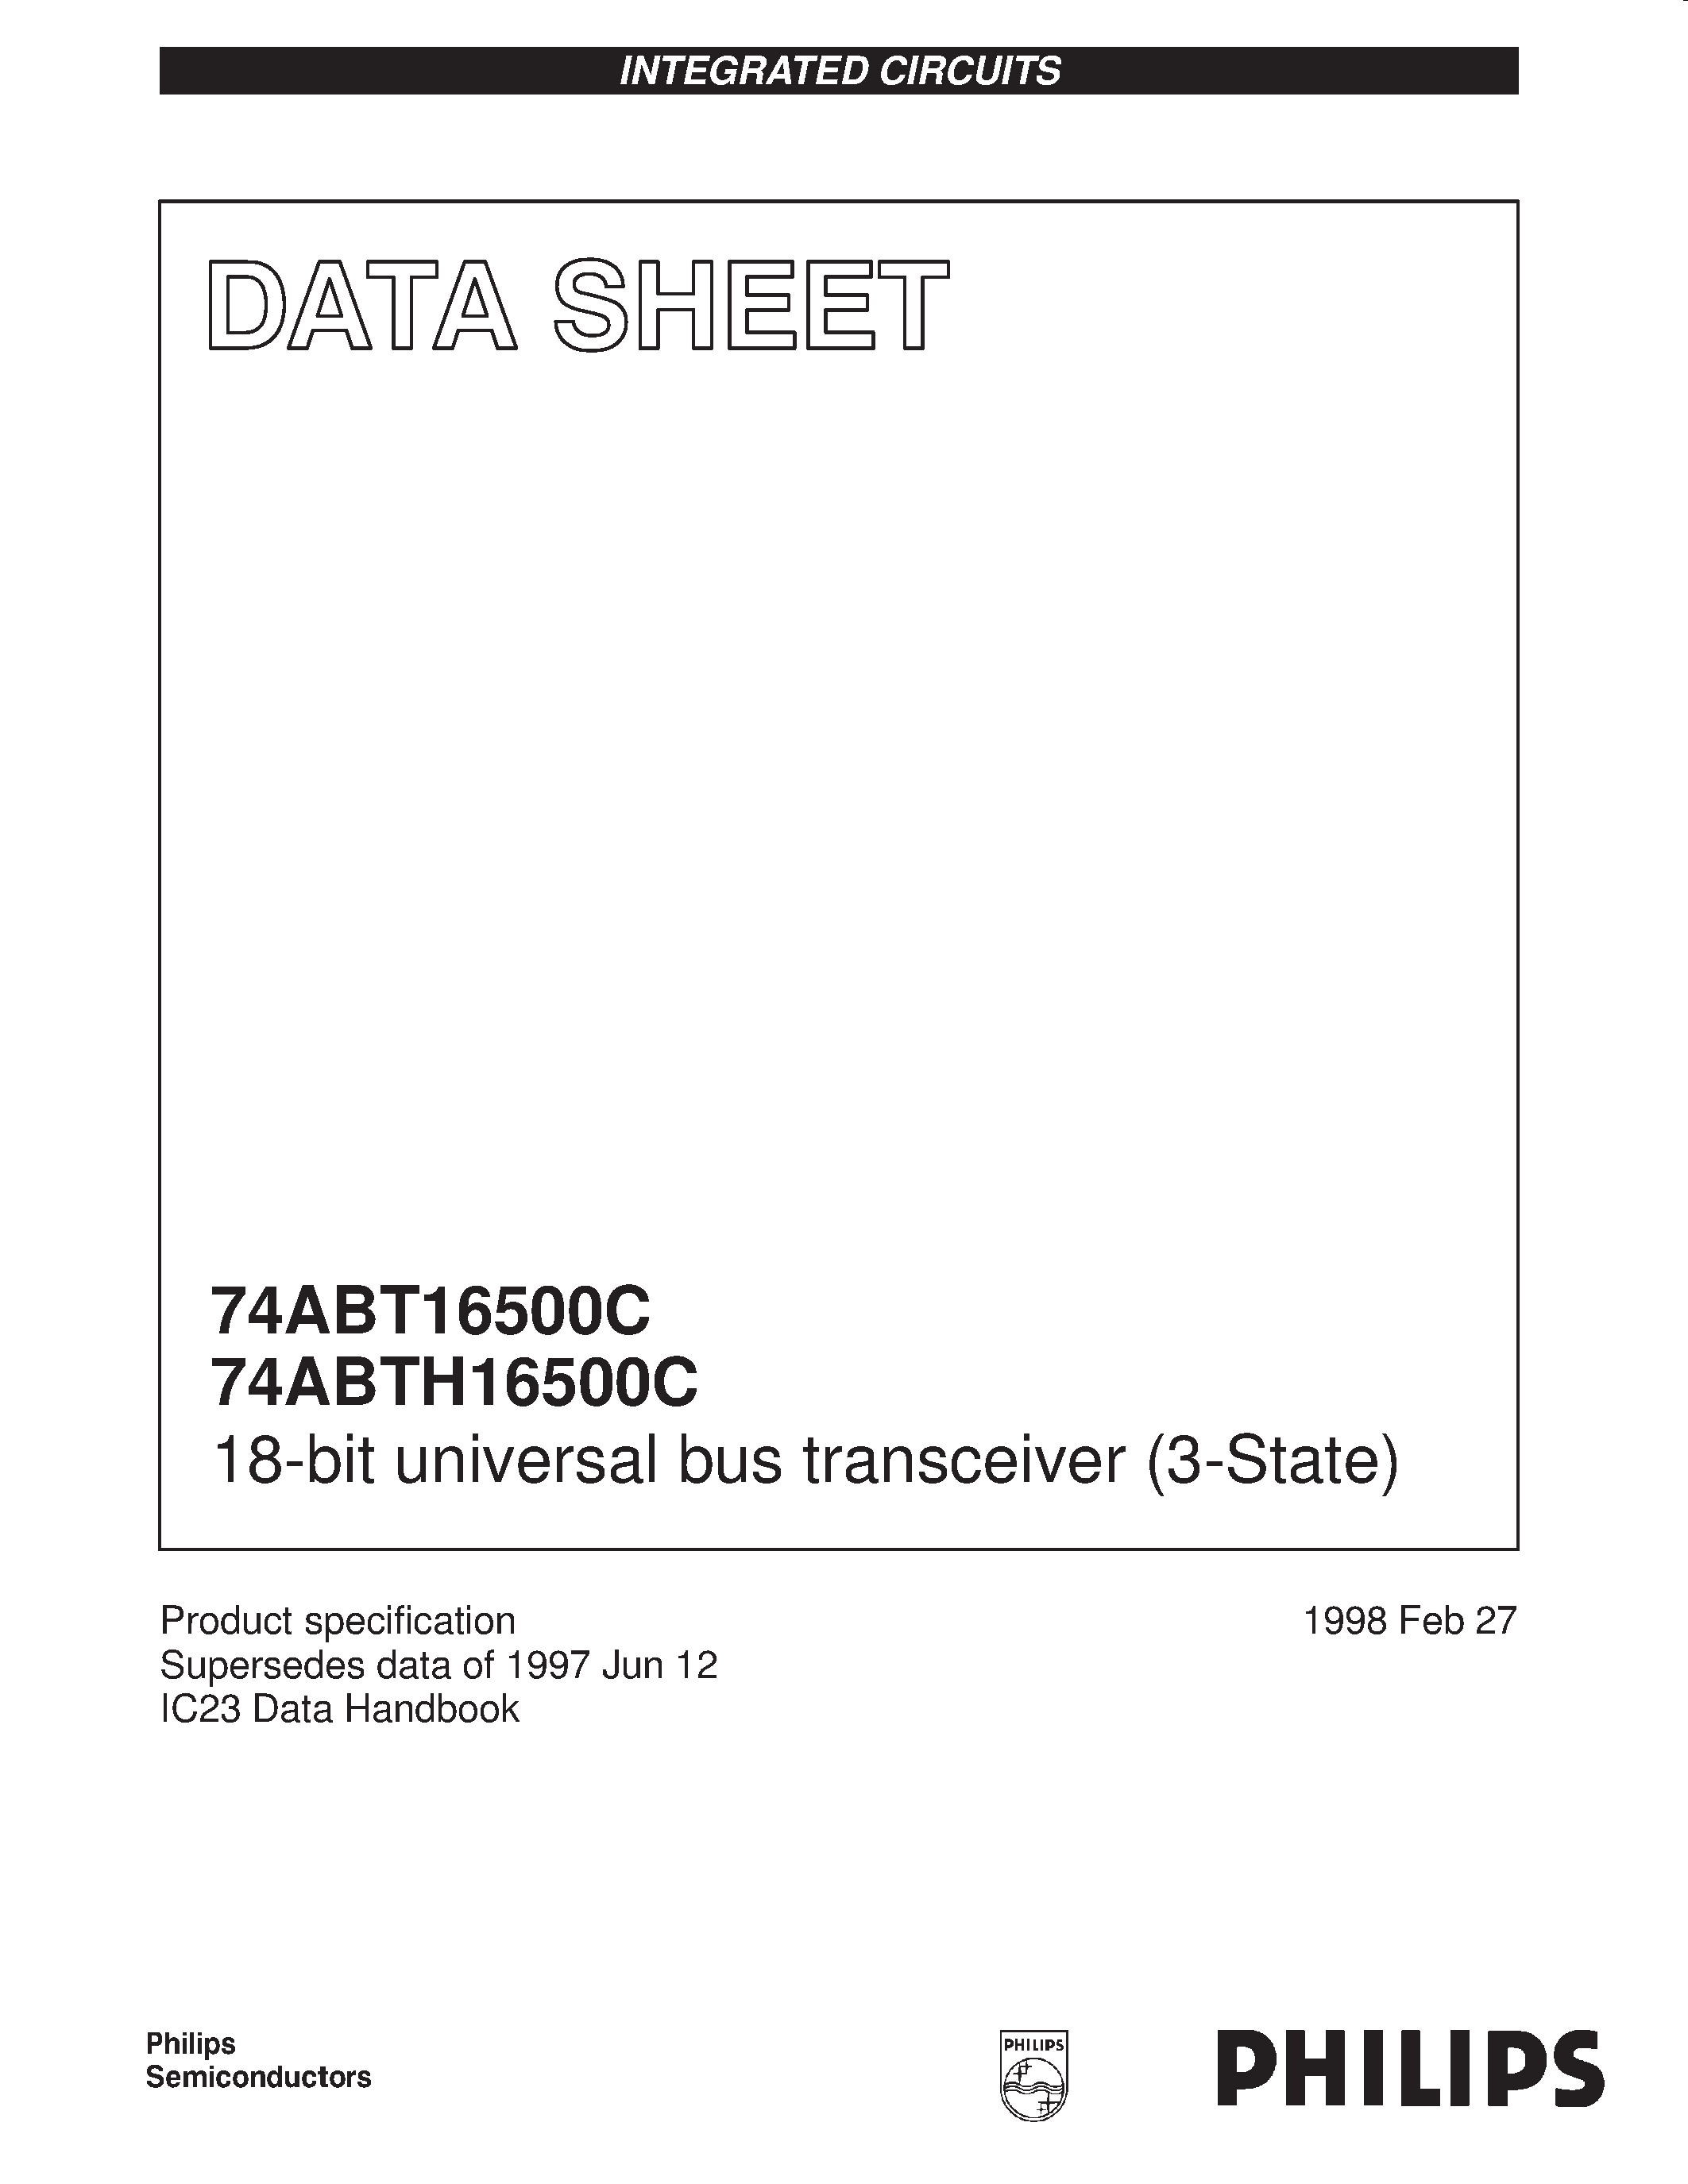 Даташит 74ABTH16500C - 18-bit universal bus transceiver 3-State страница 1